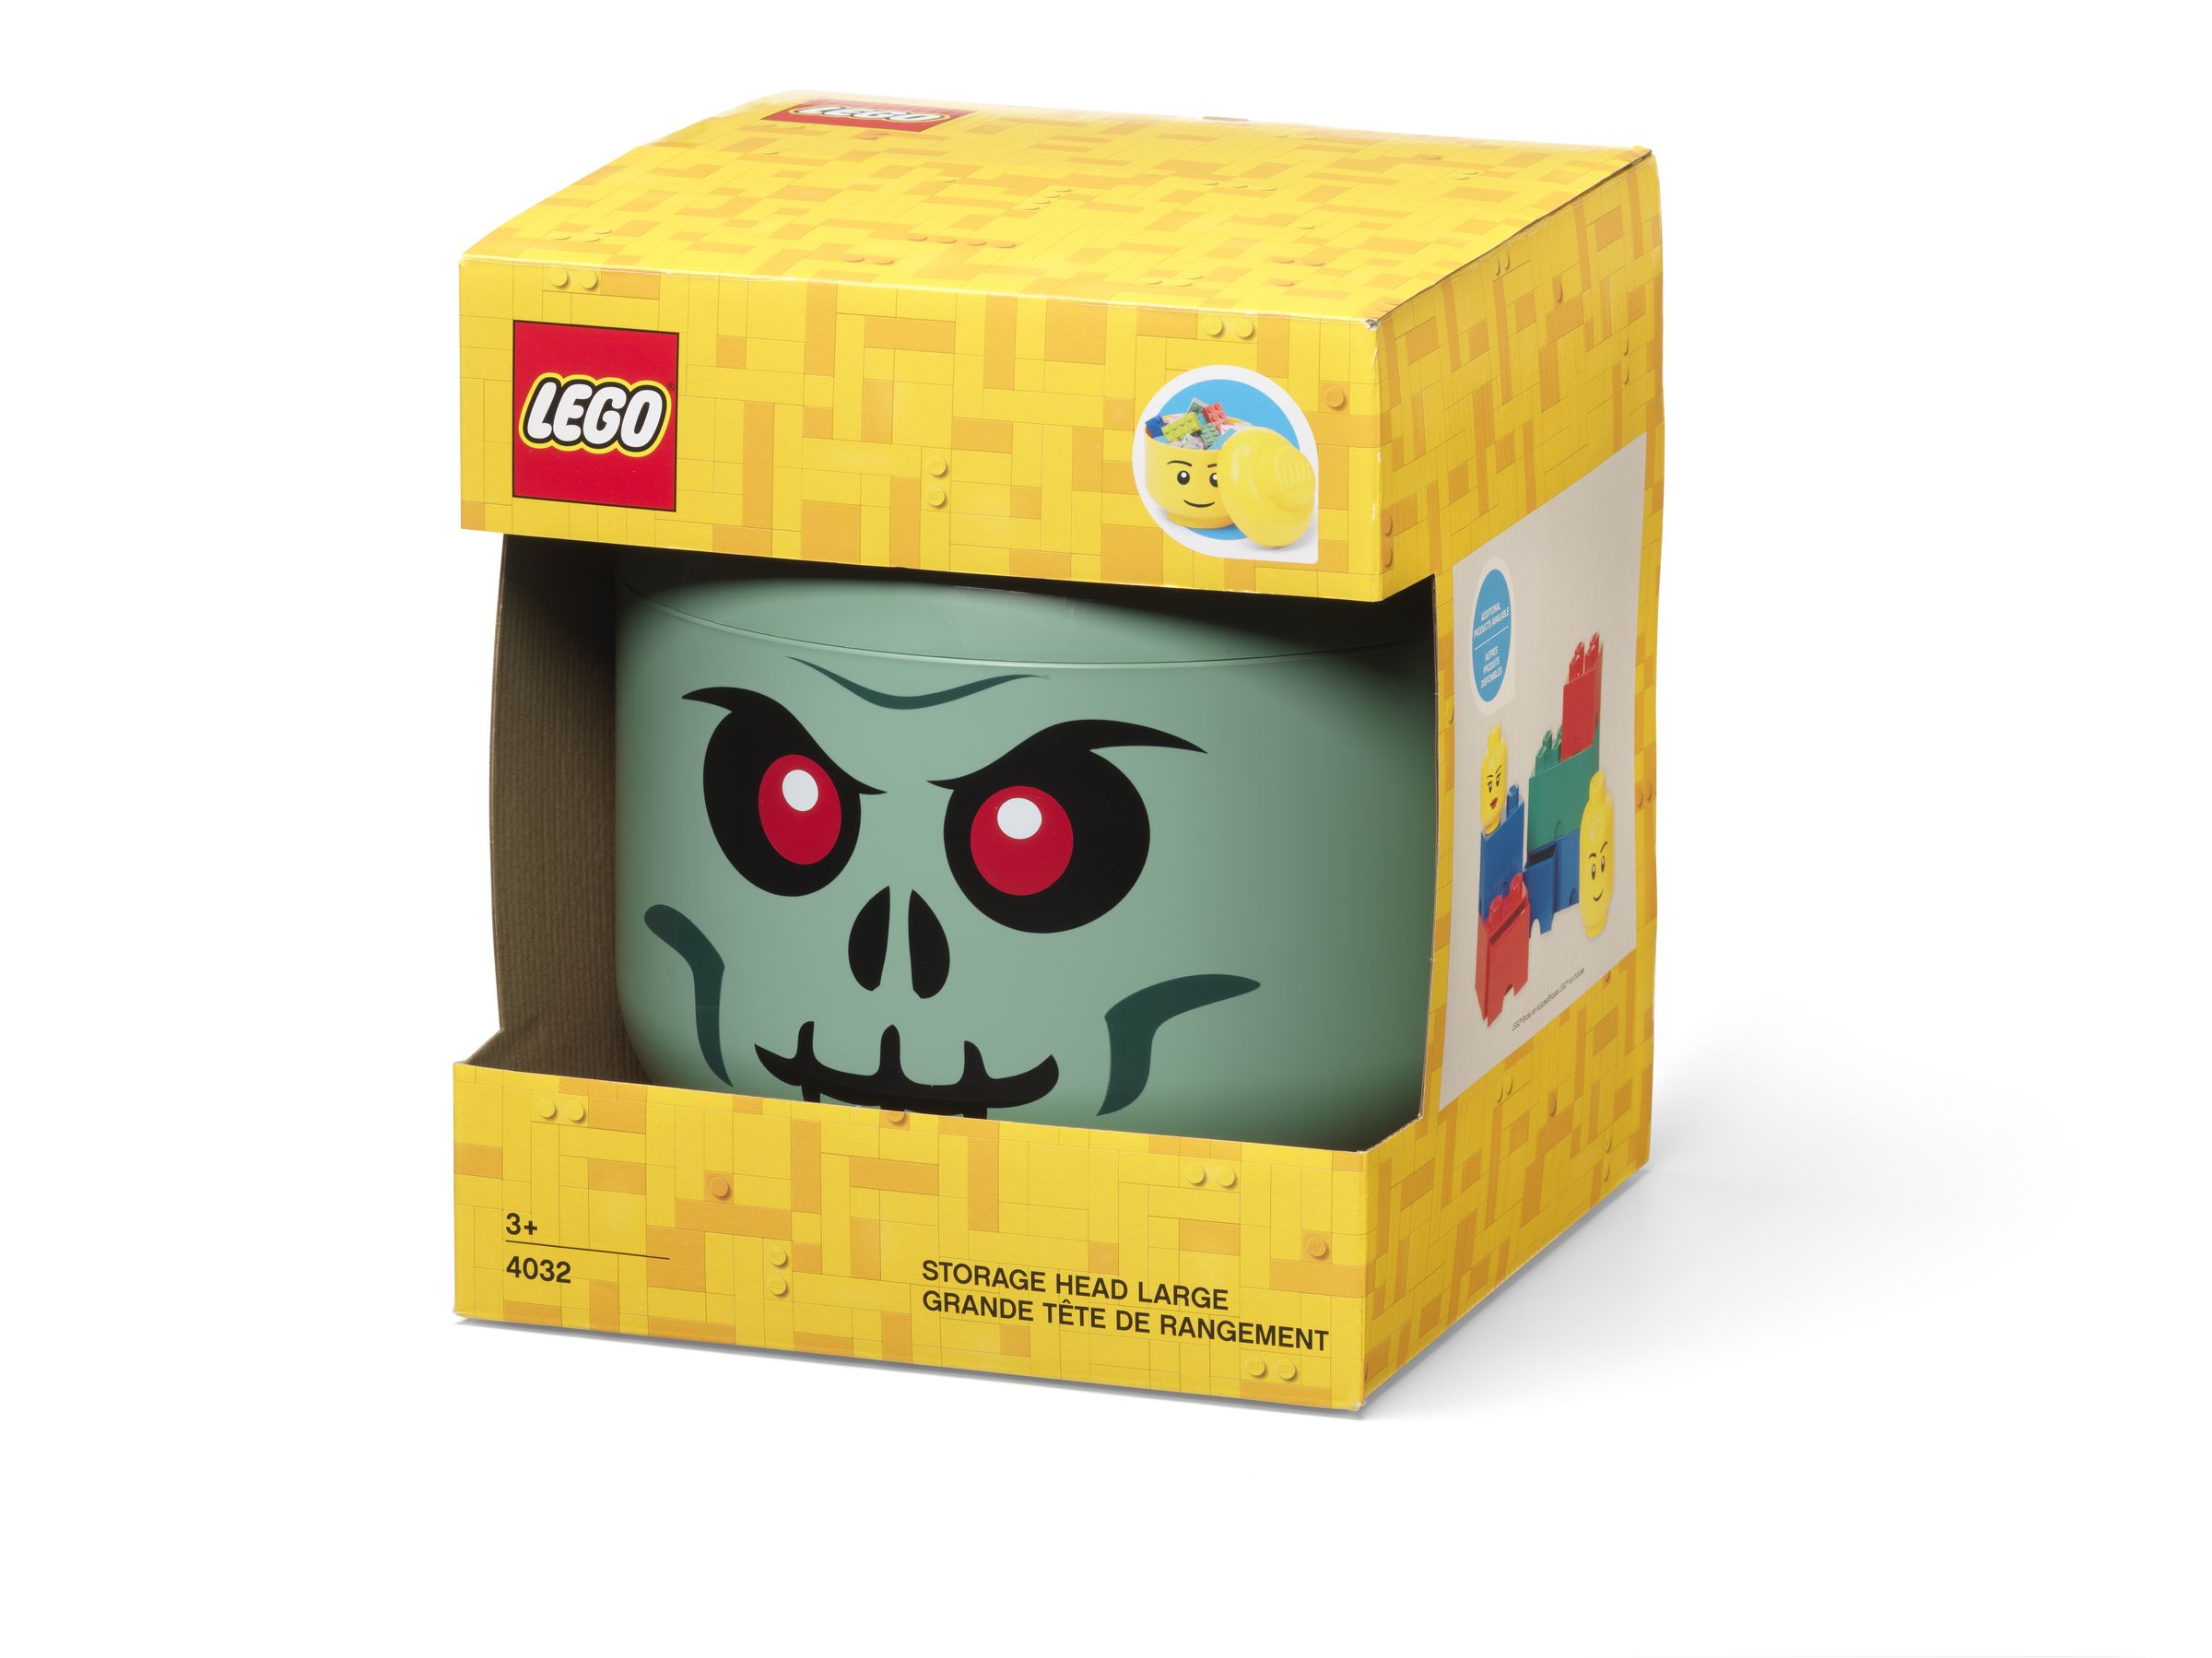 LEGO Gear 5007889 Skelettkopf – Große Aufbewahrungsbox in Grün LEGO_5007889_alt1.jpg